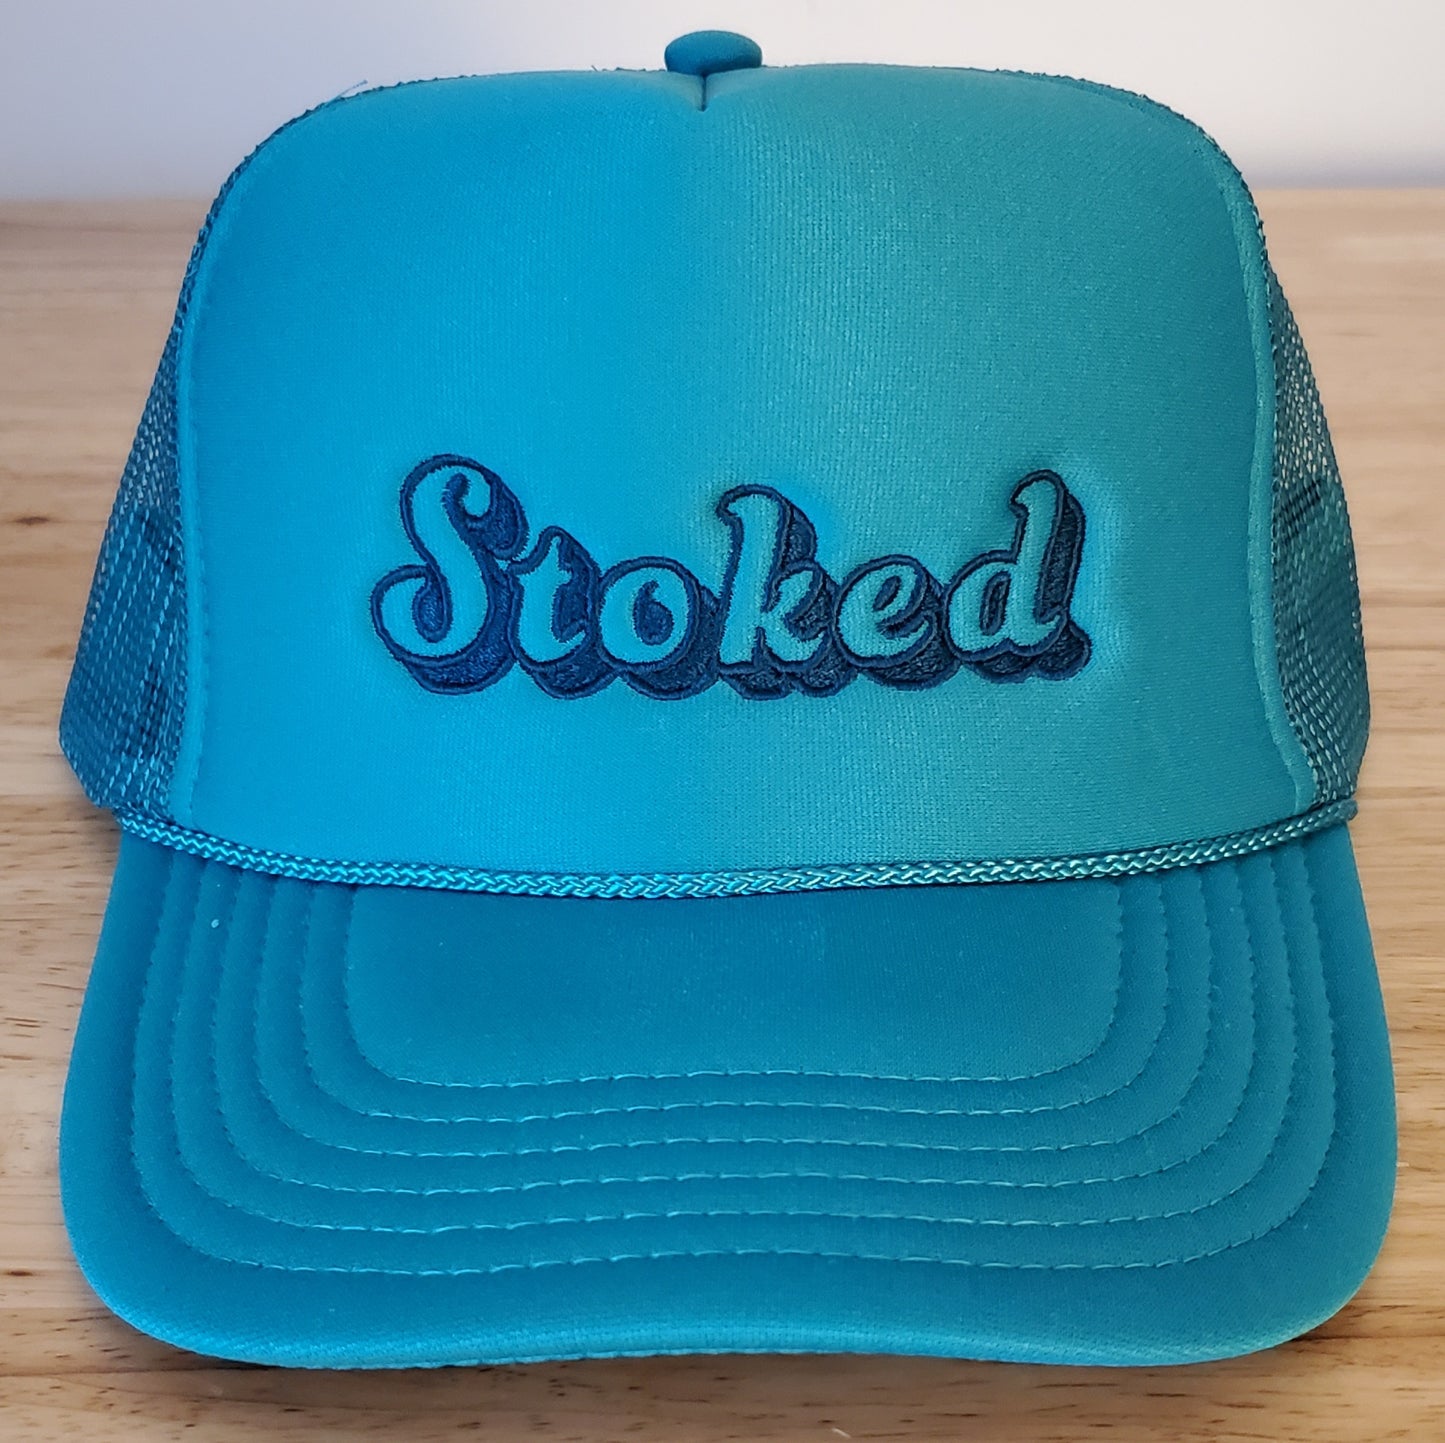 Stoked Trucker Hat